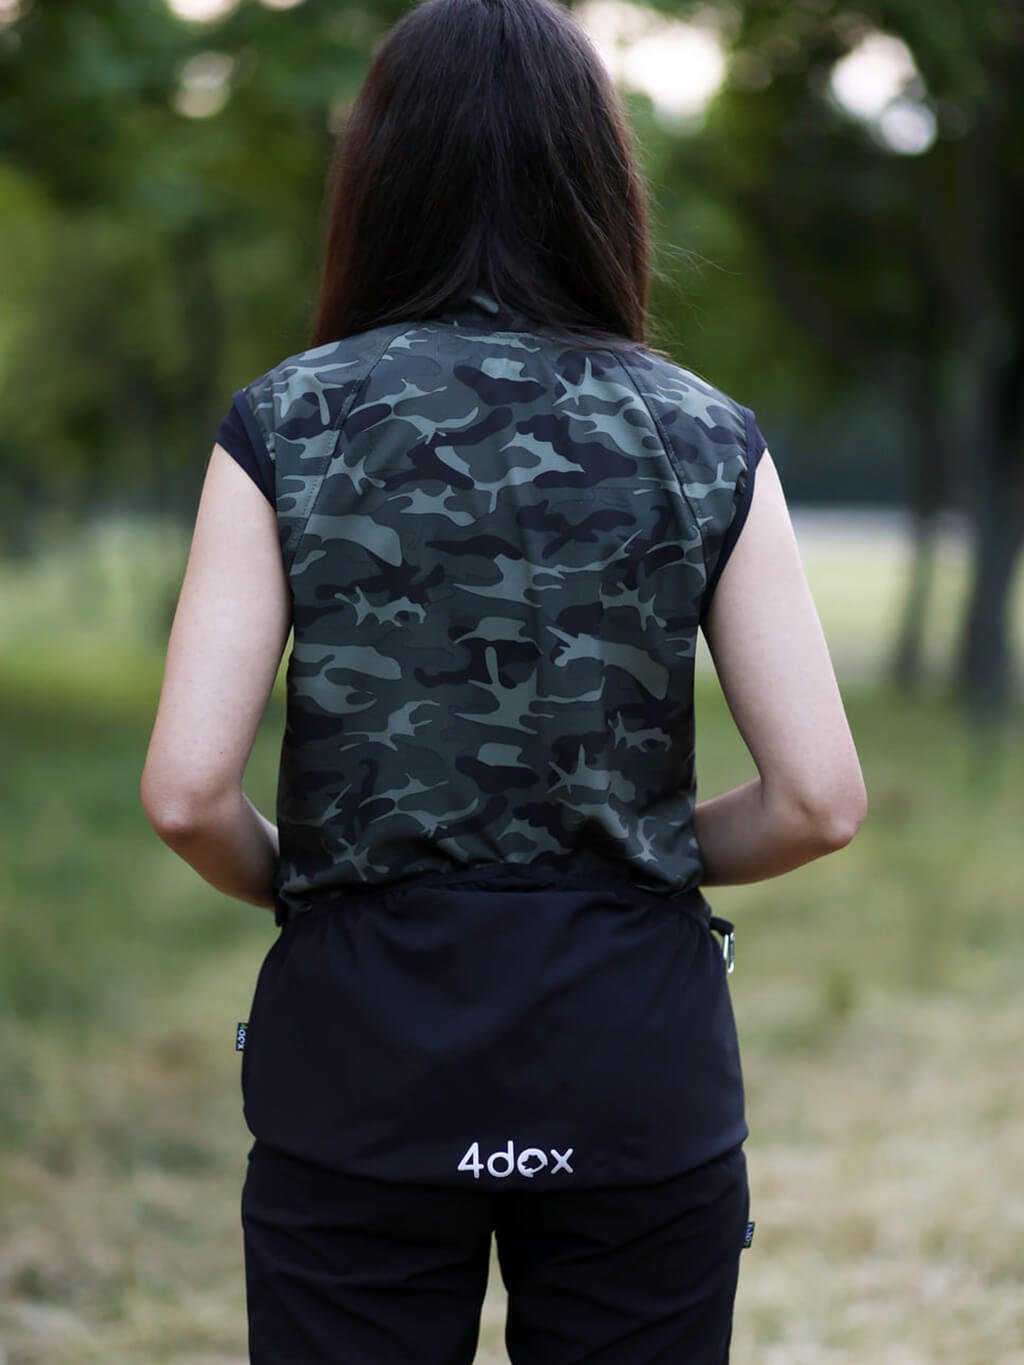 Ladies training vest - reflective camouflage 4dox